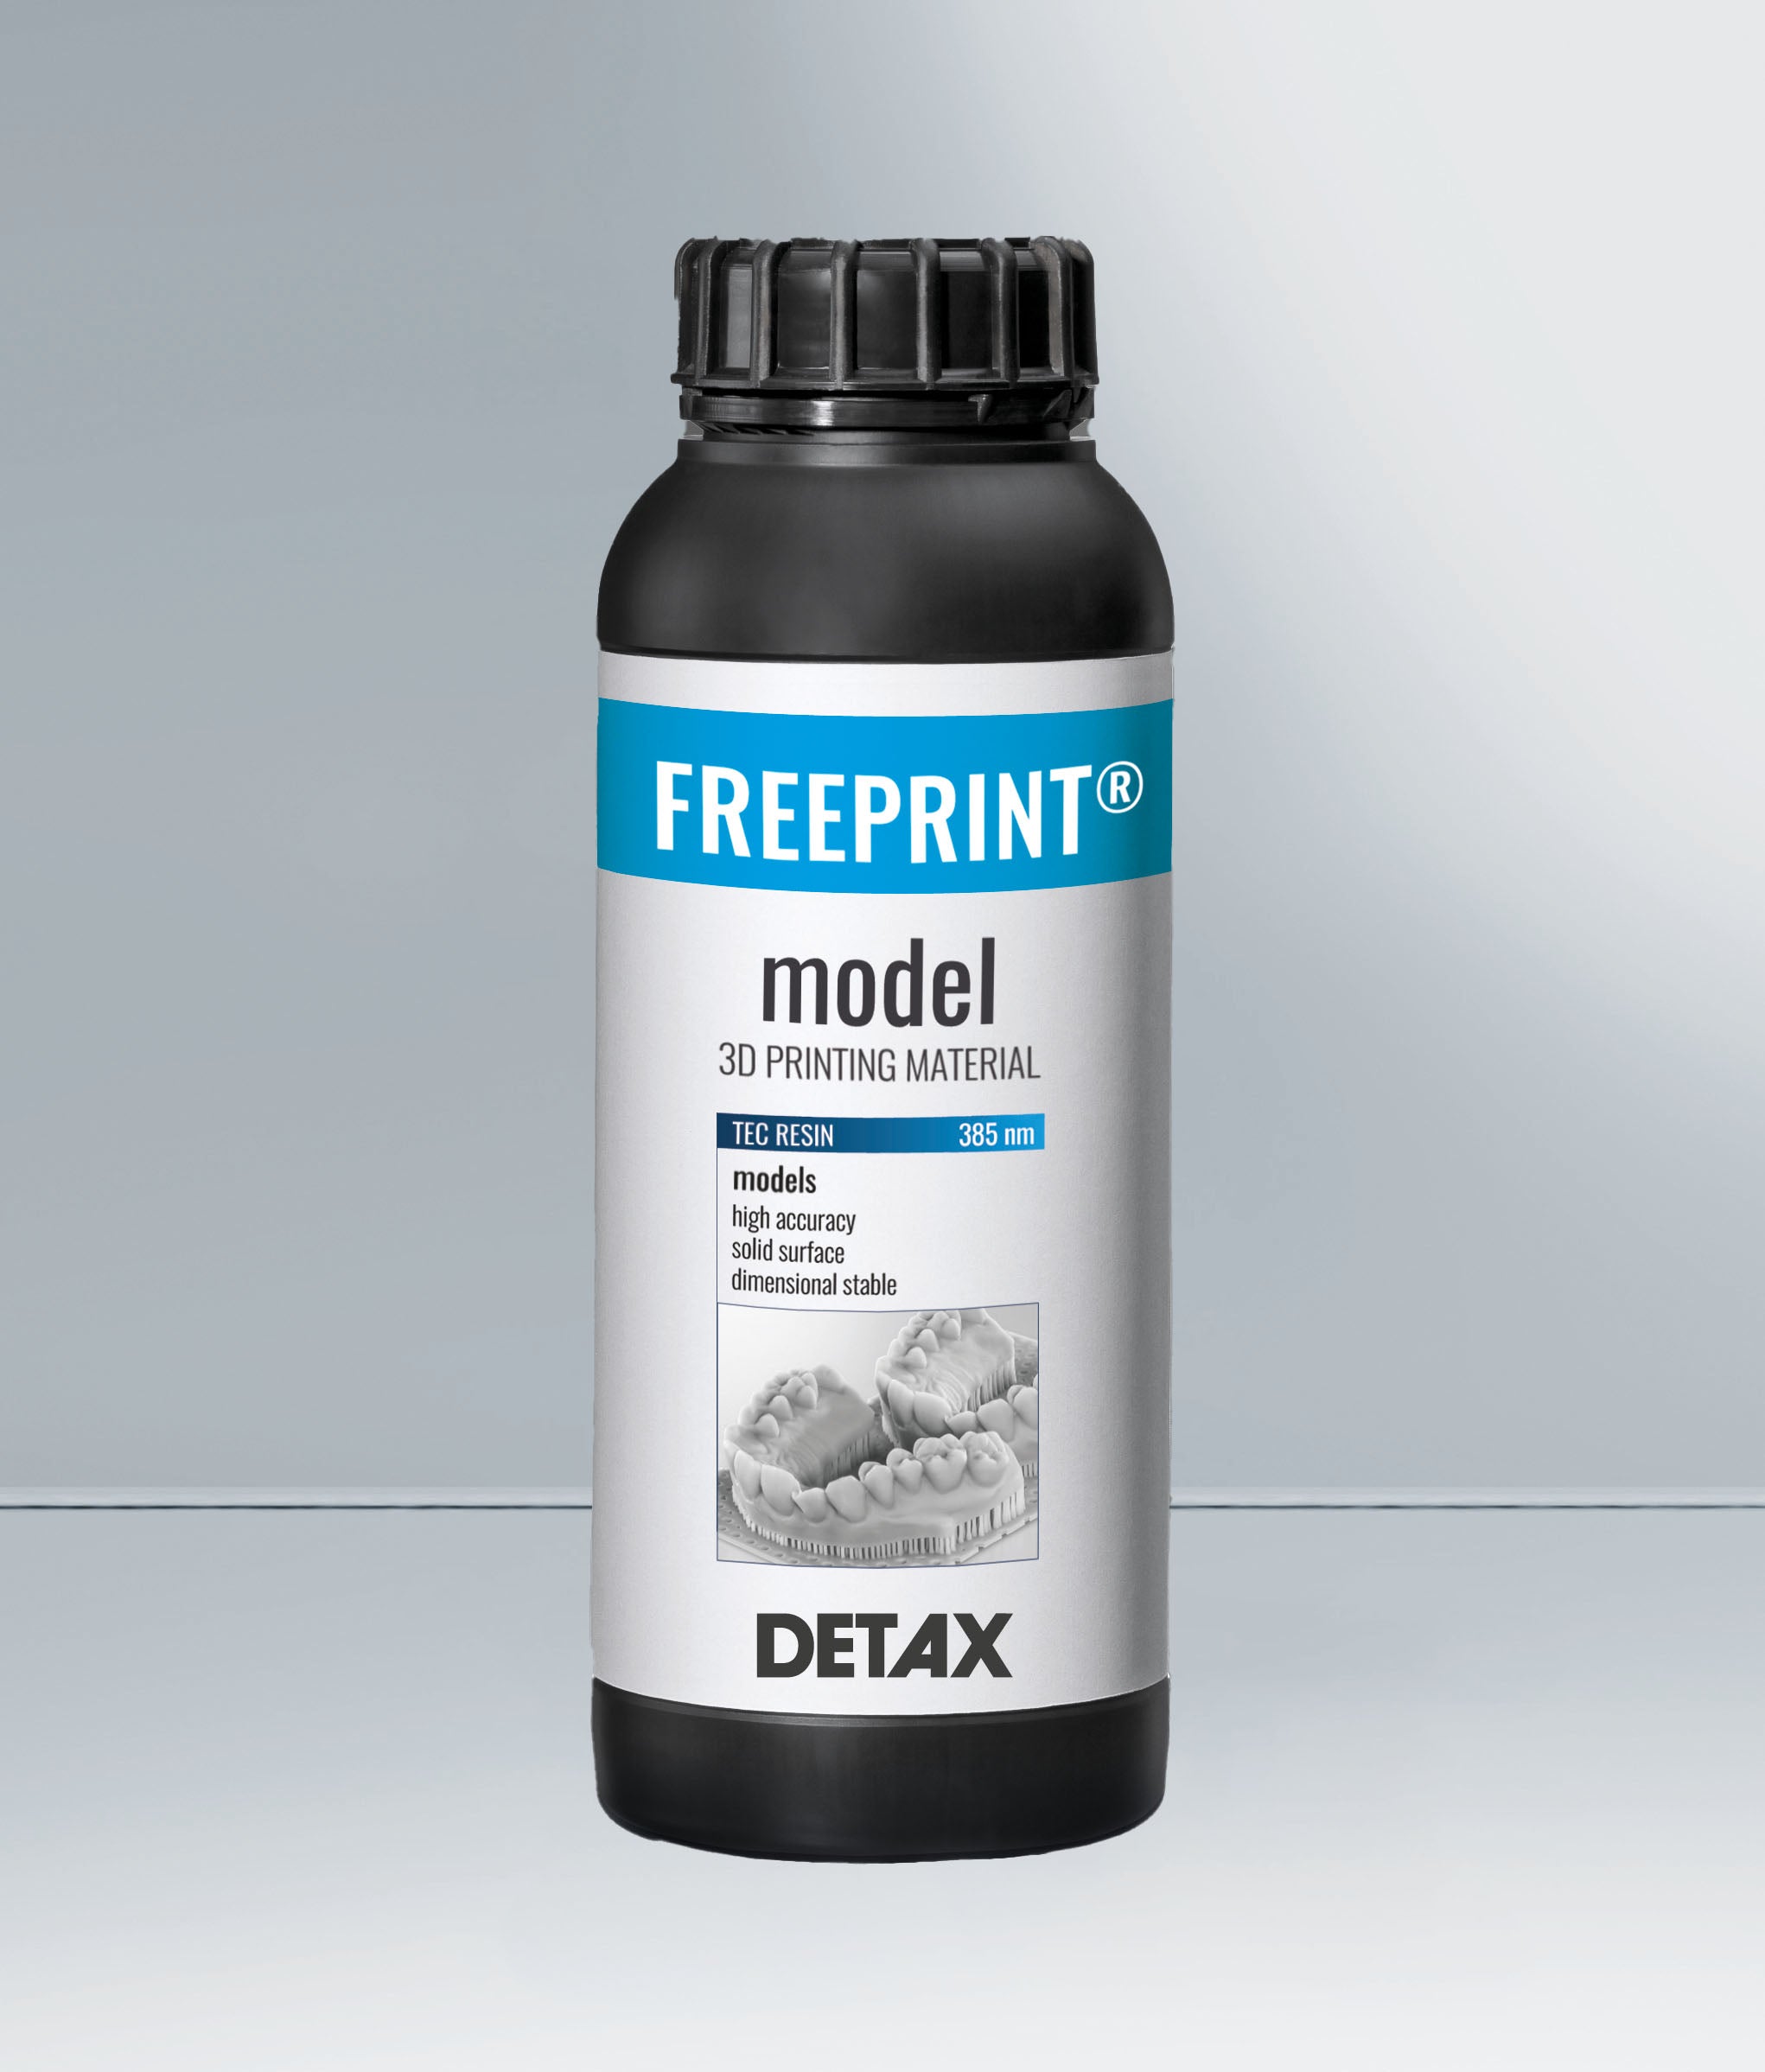 Detax Freeprint Model